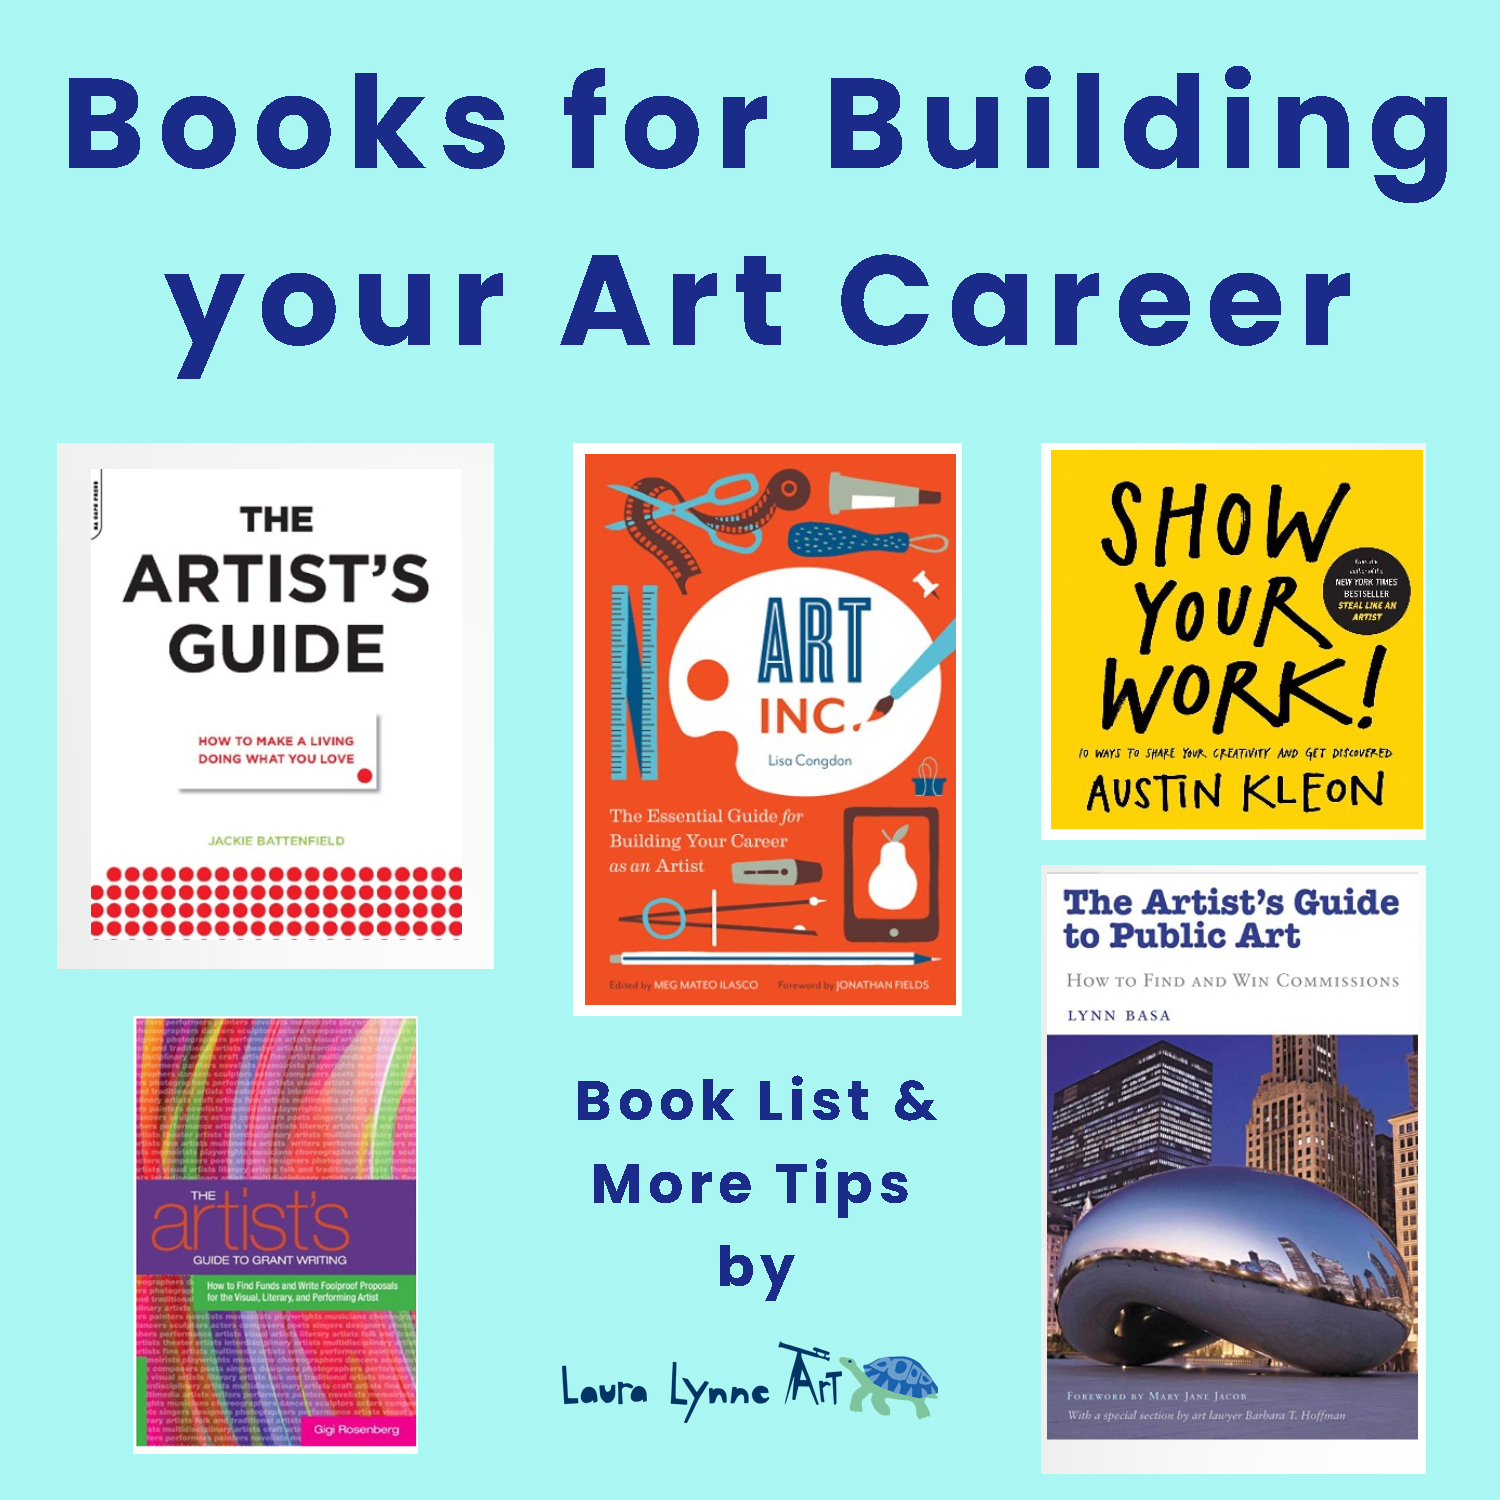 Reading book list for artists seeking art careers